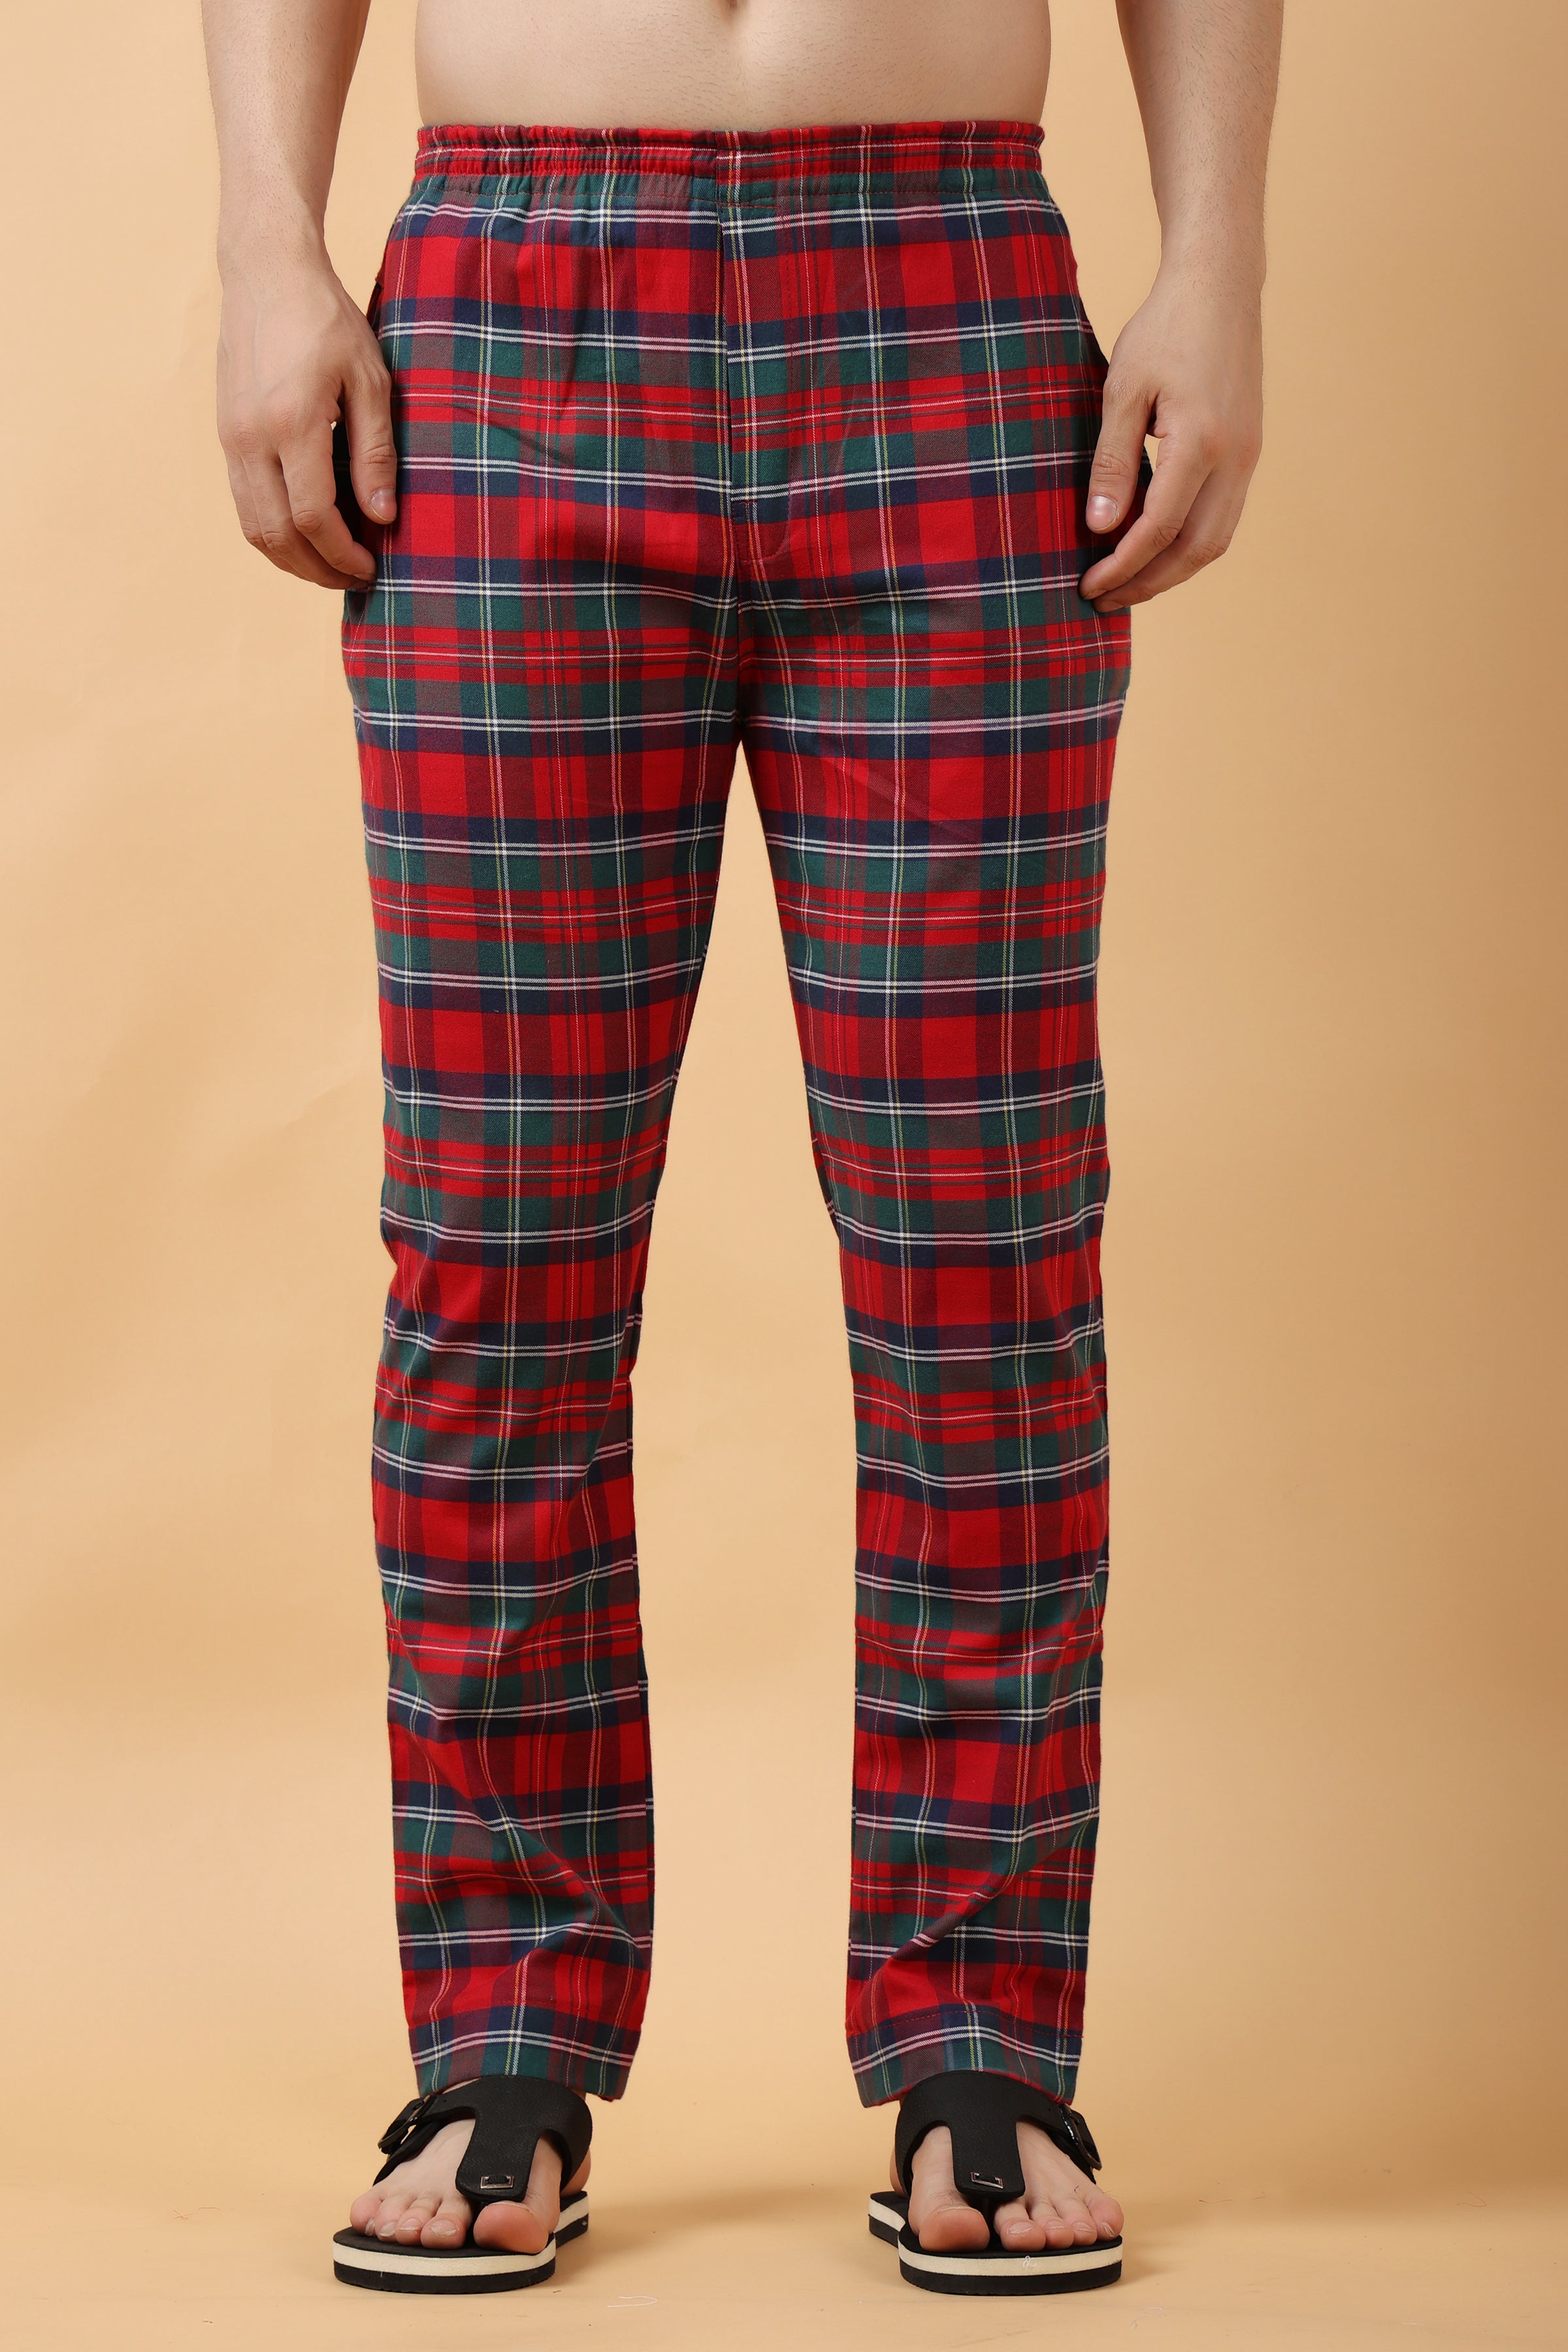 Urban Scottish Men Pyjama  Buy Urban Scottish Men Pyjama Online at Best  Prices in India  Flipkartcom